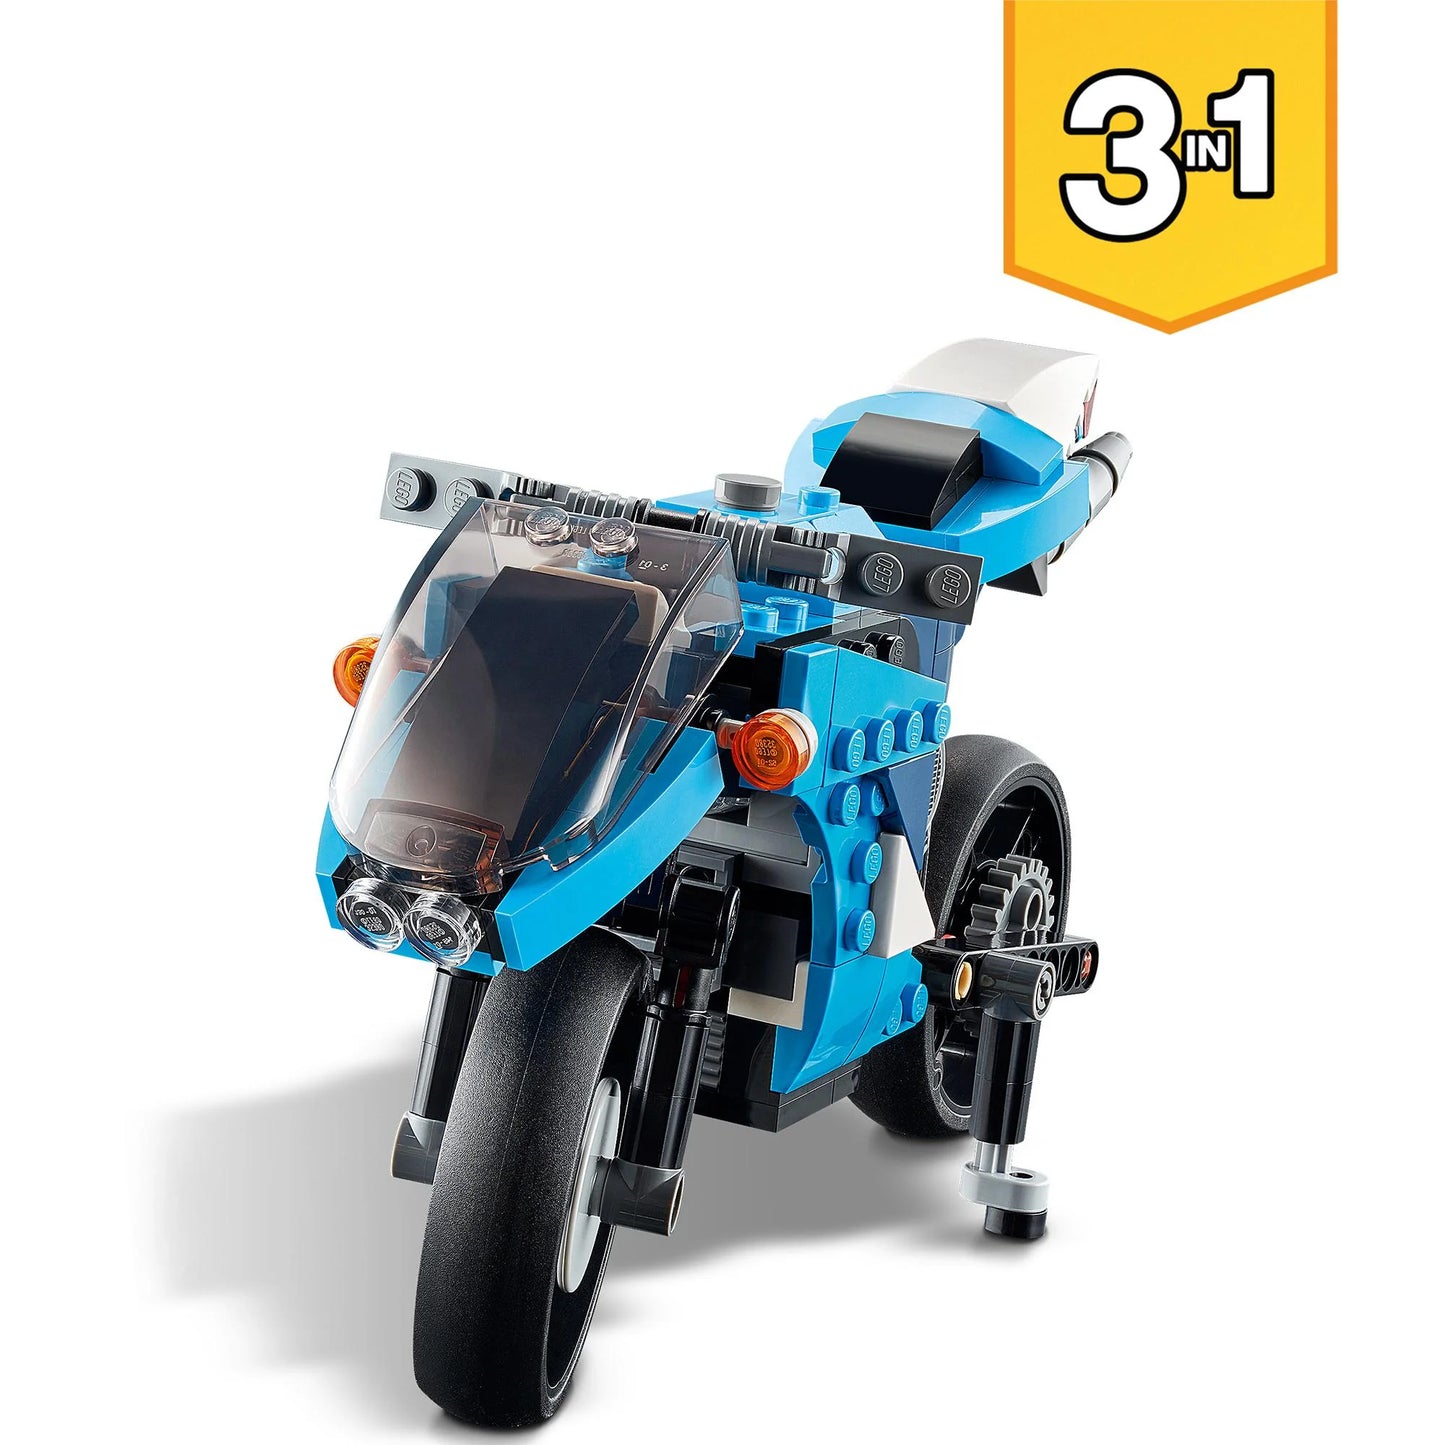 Snelle Motor-LEGO Creator